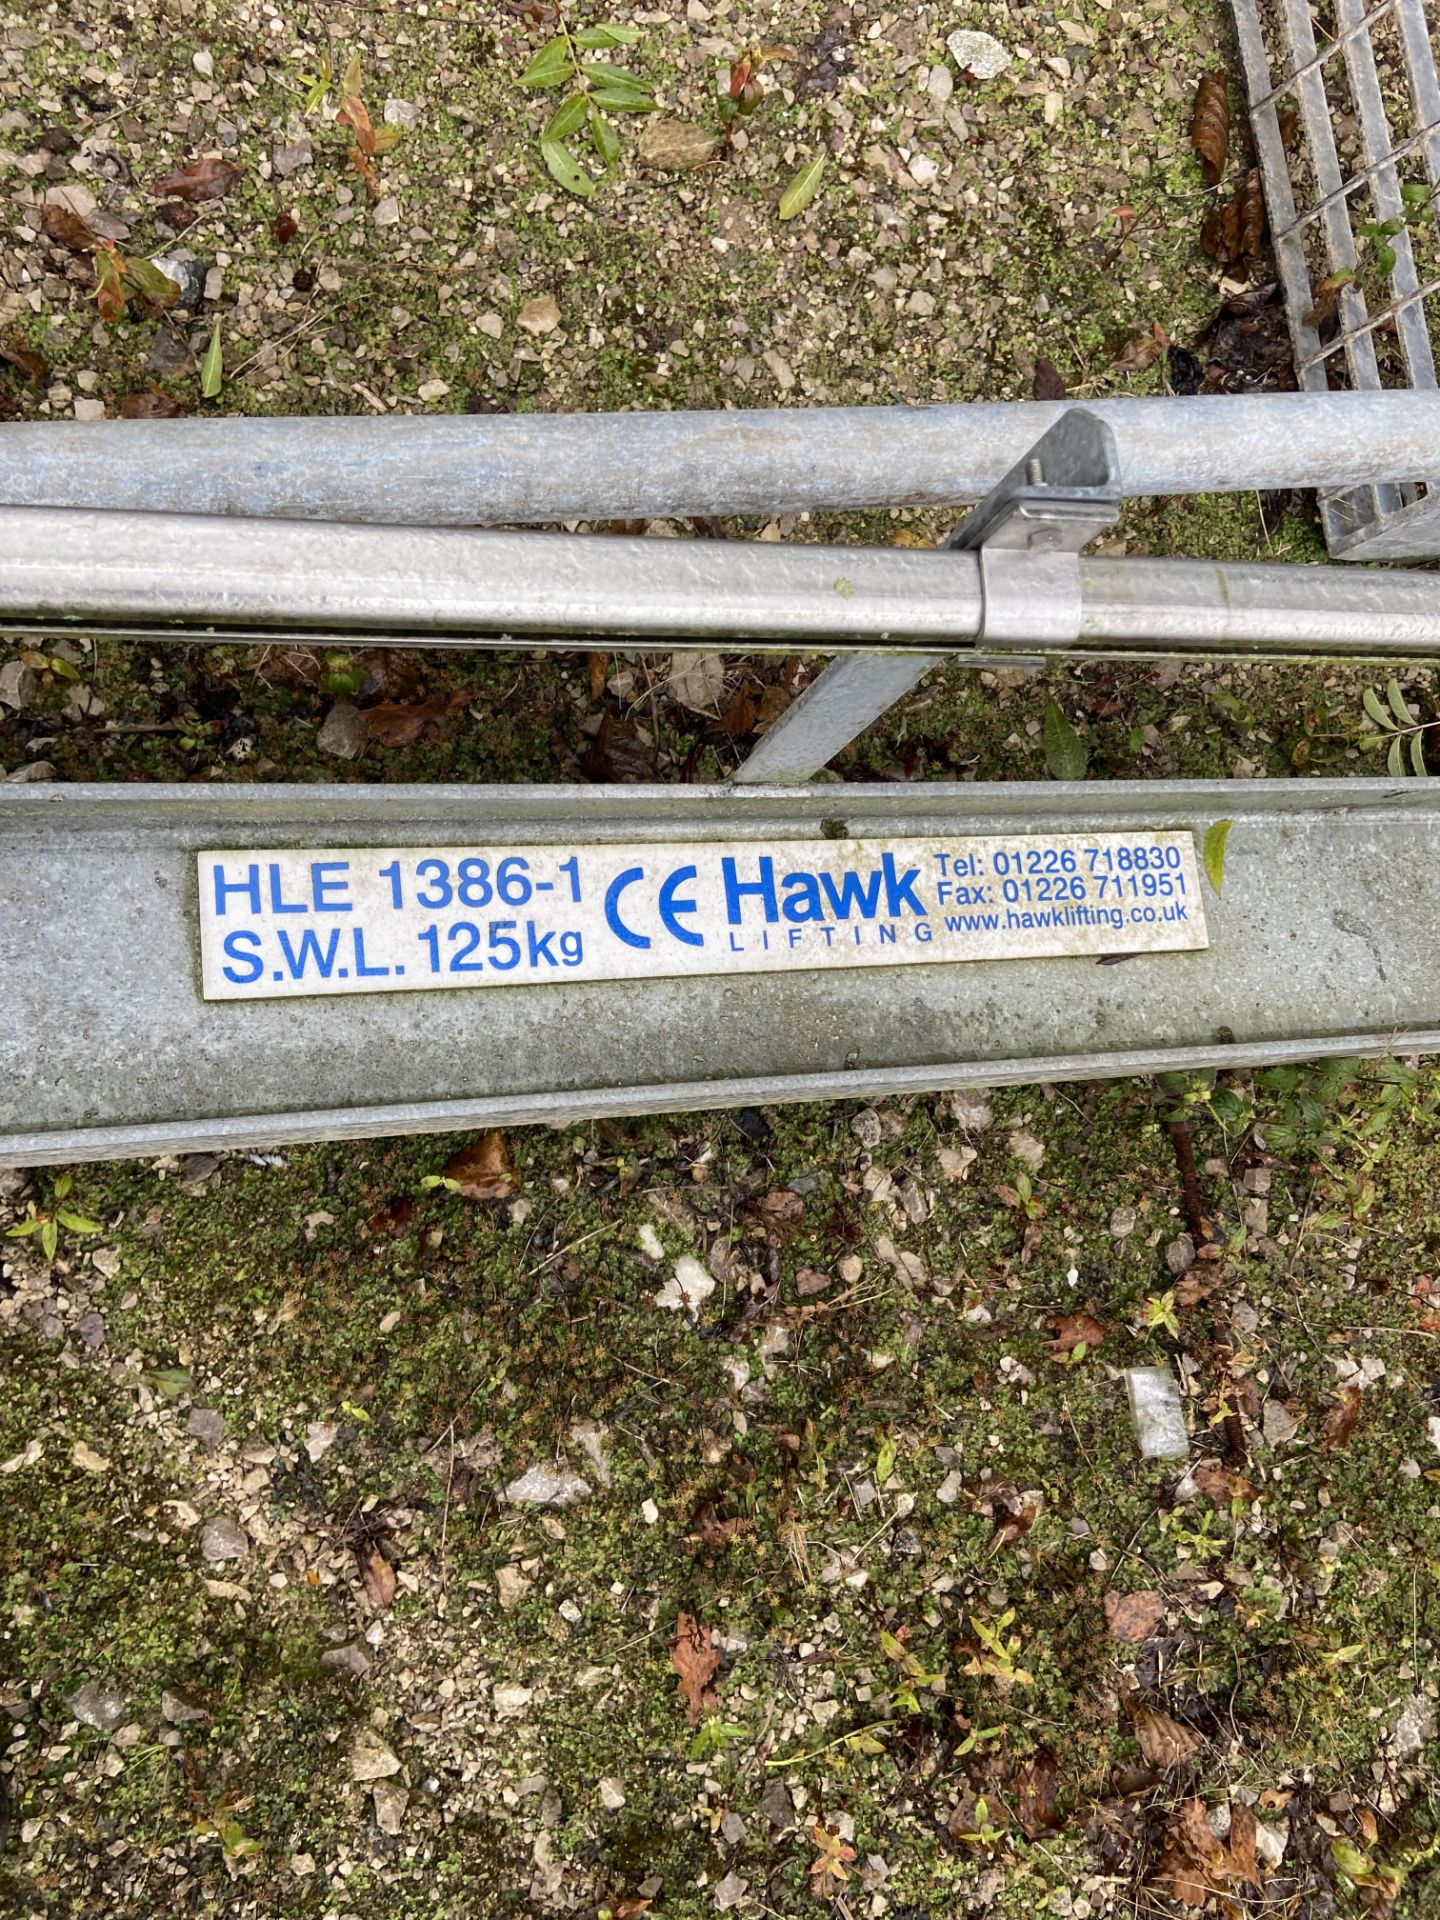 Hawk Lifting Galvanised Steel Jib Arm, 125kg SWL, approx. 3.2m x 2.95m. Lot located Bretherton, - Image 3 of 3